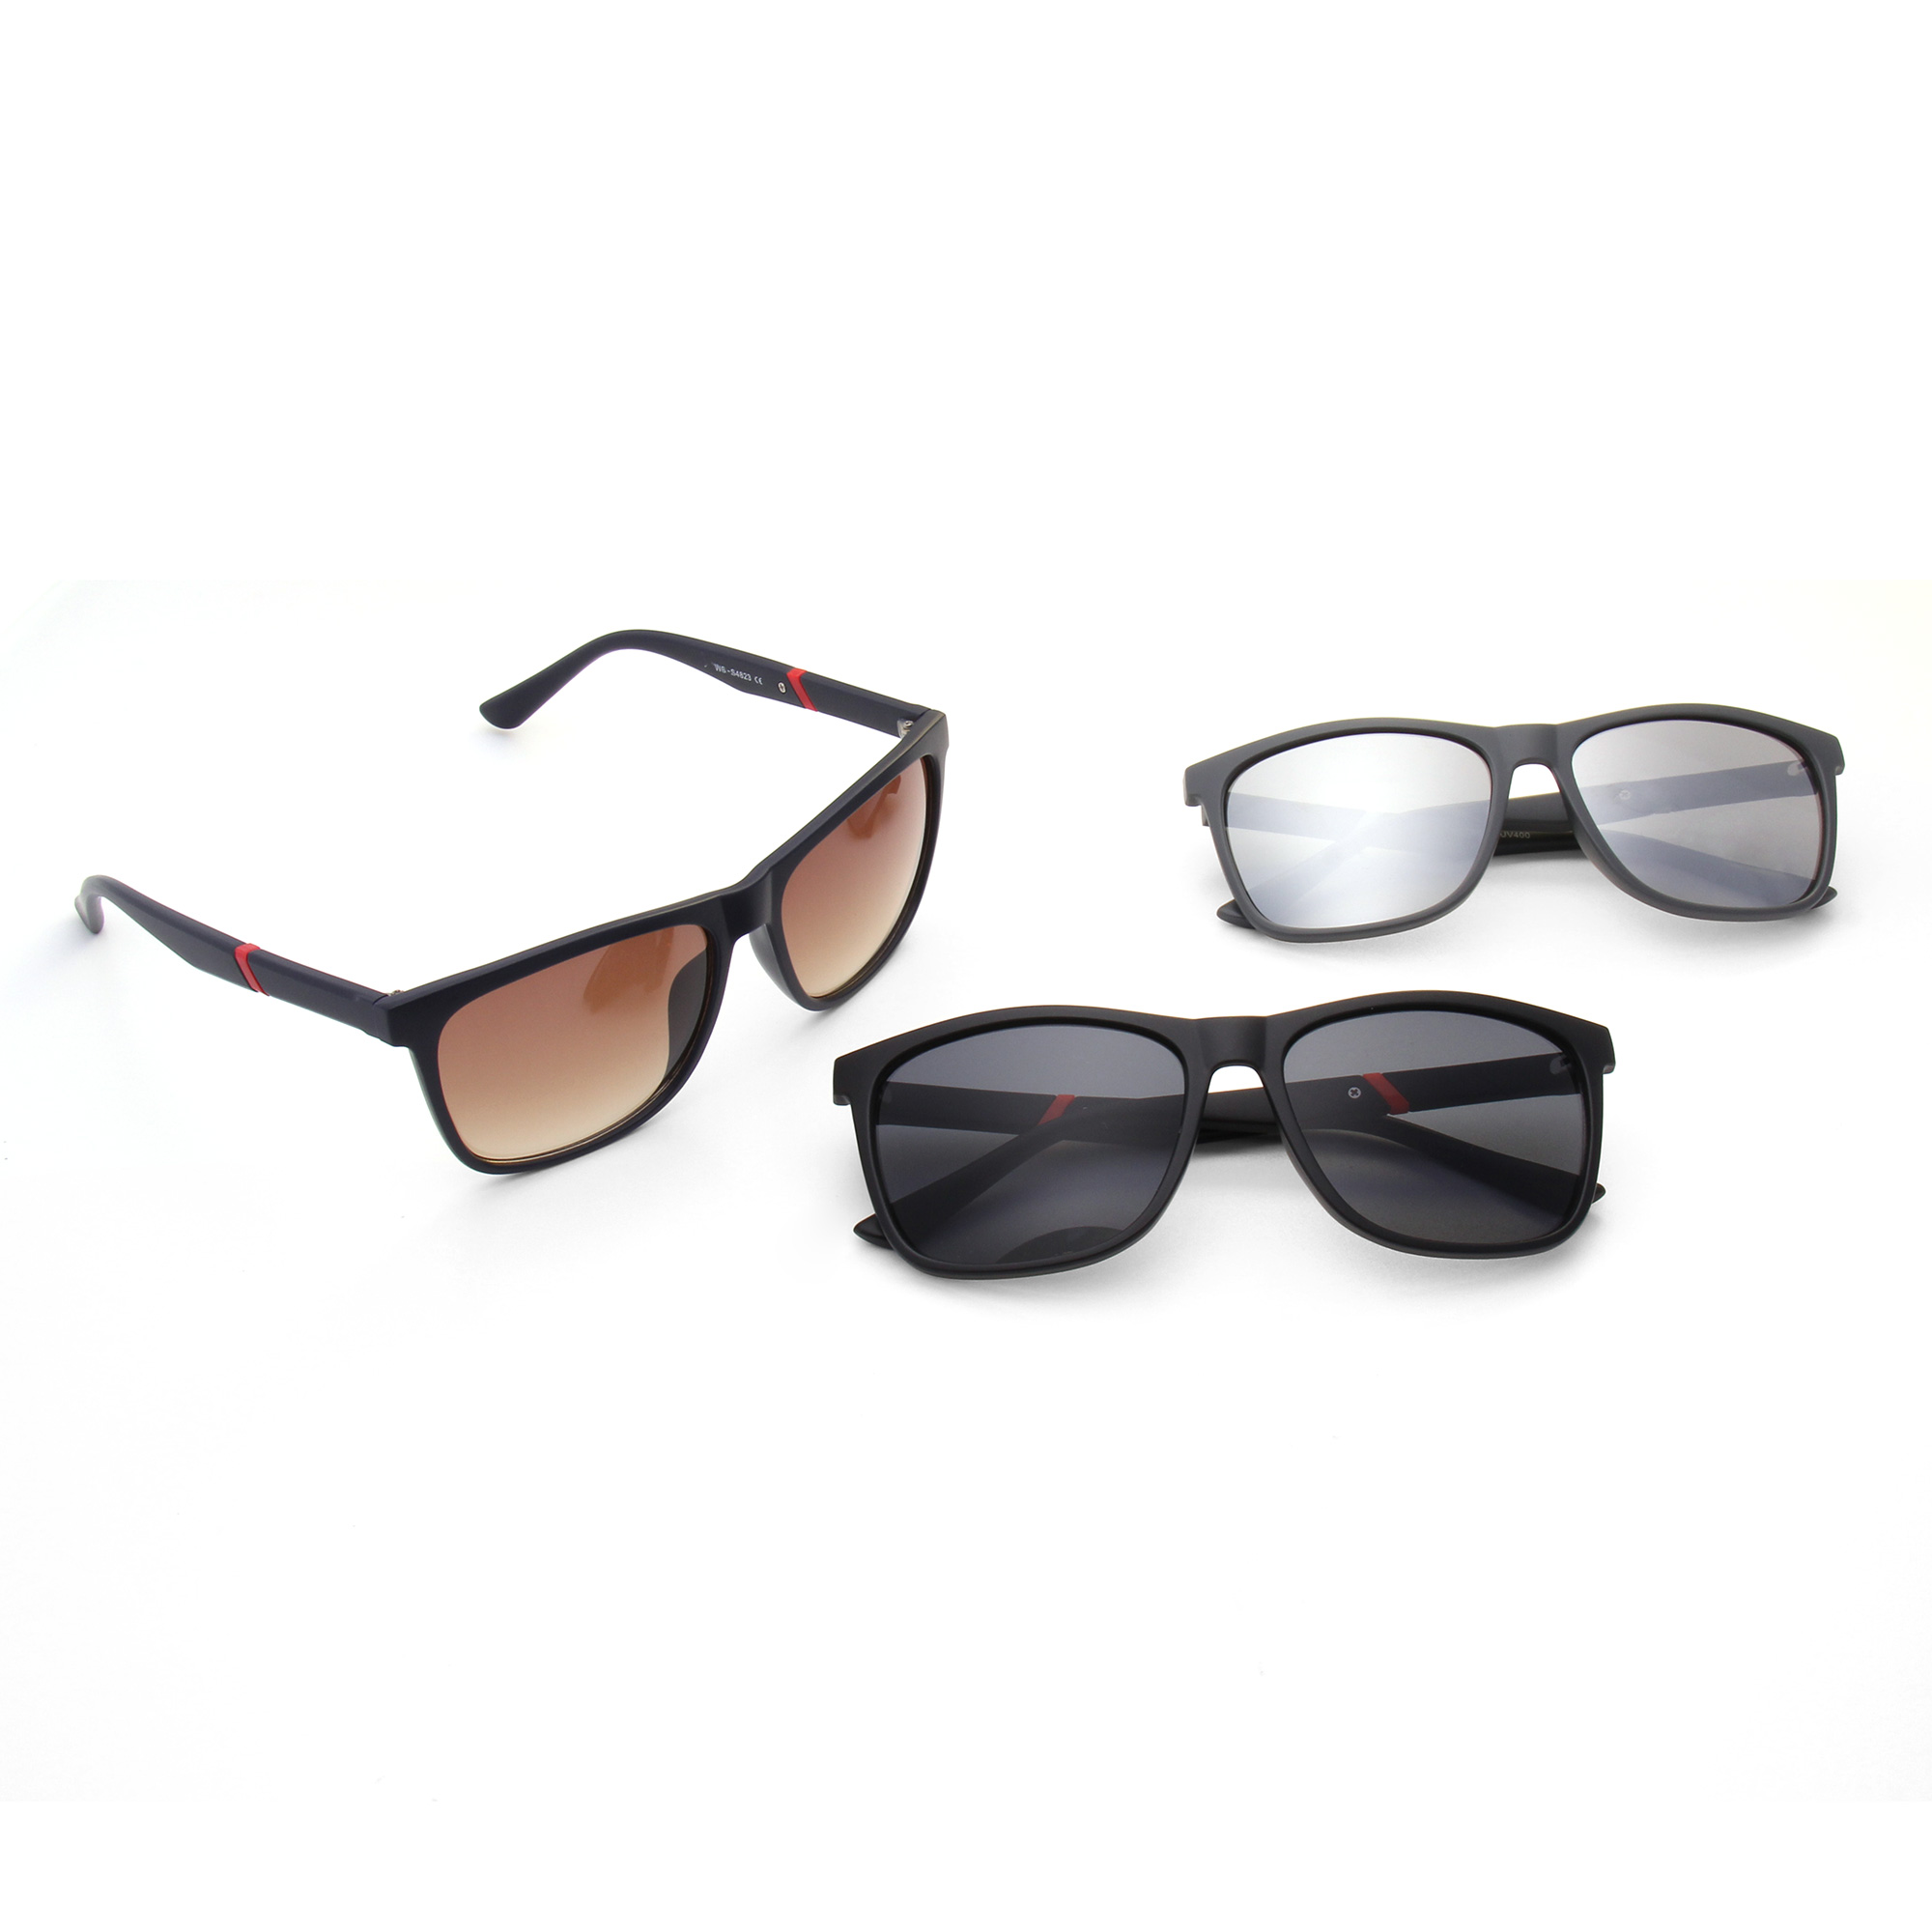 Eugenia fashion classic mens sunglasses for outdoor-2